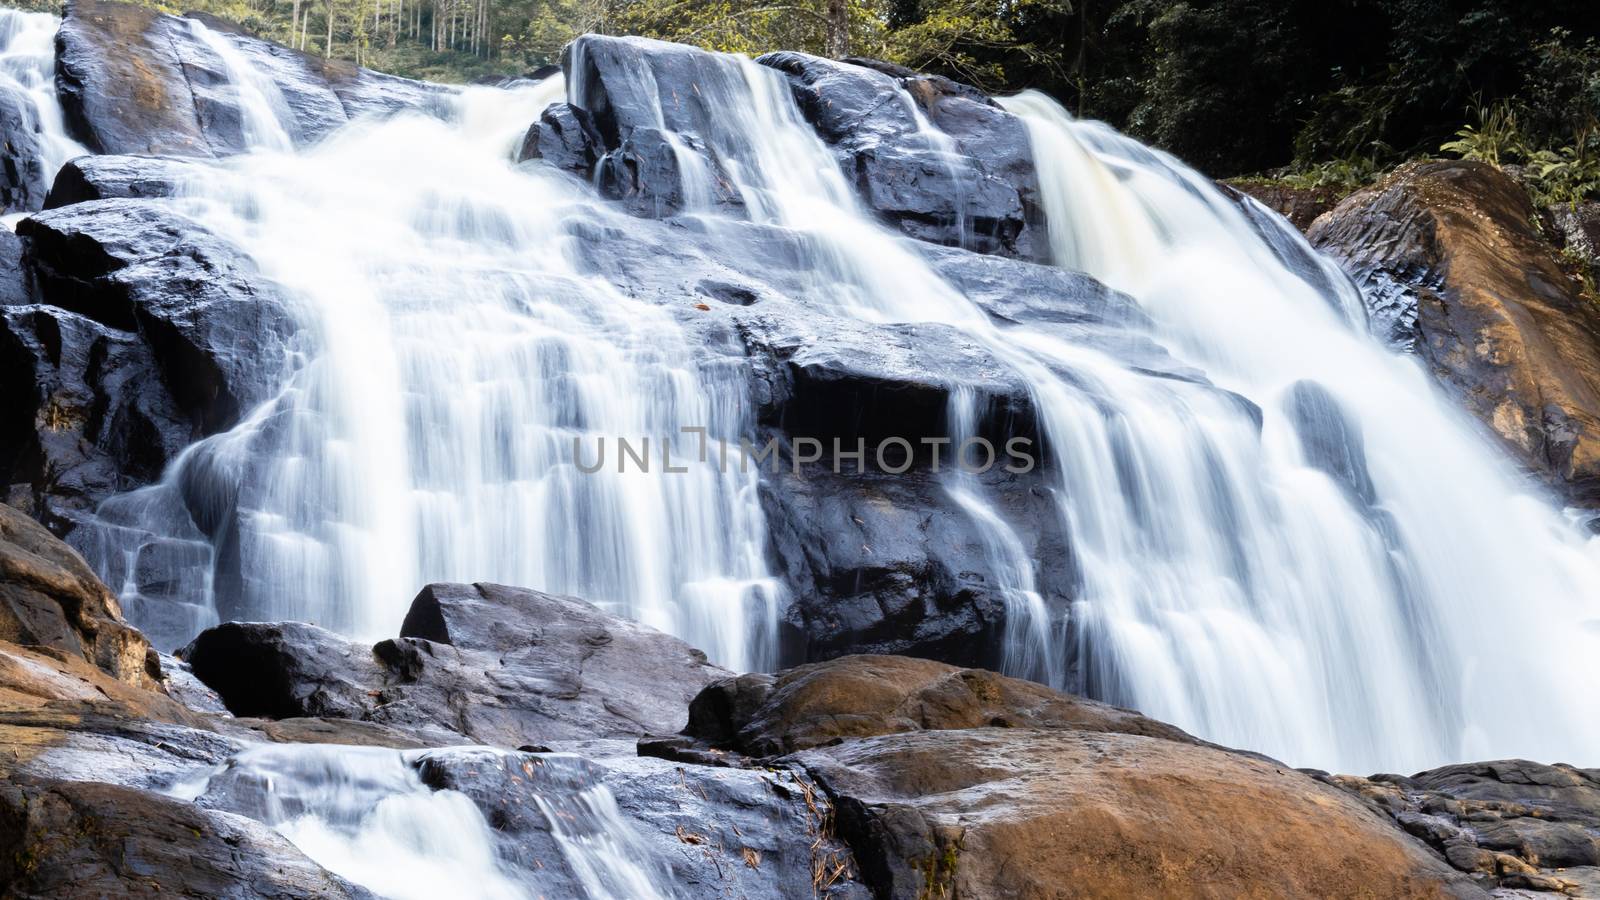 Long exposure photography of a waterfall in Deniyaya